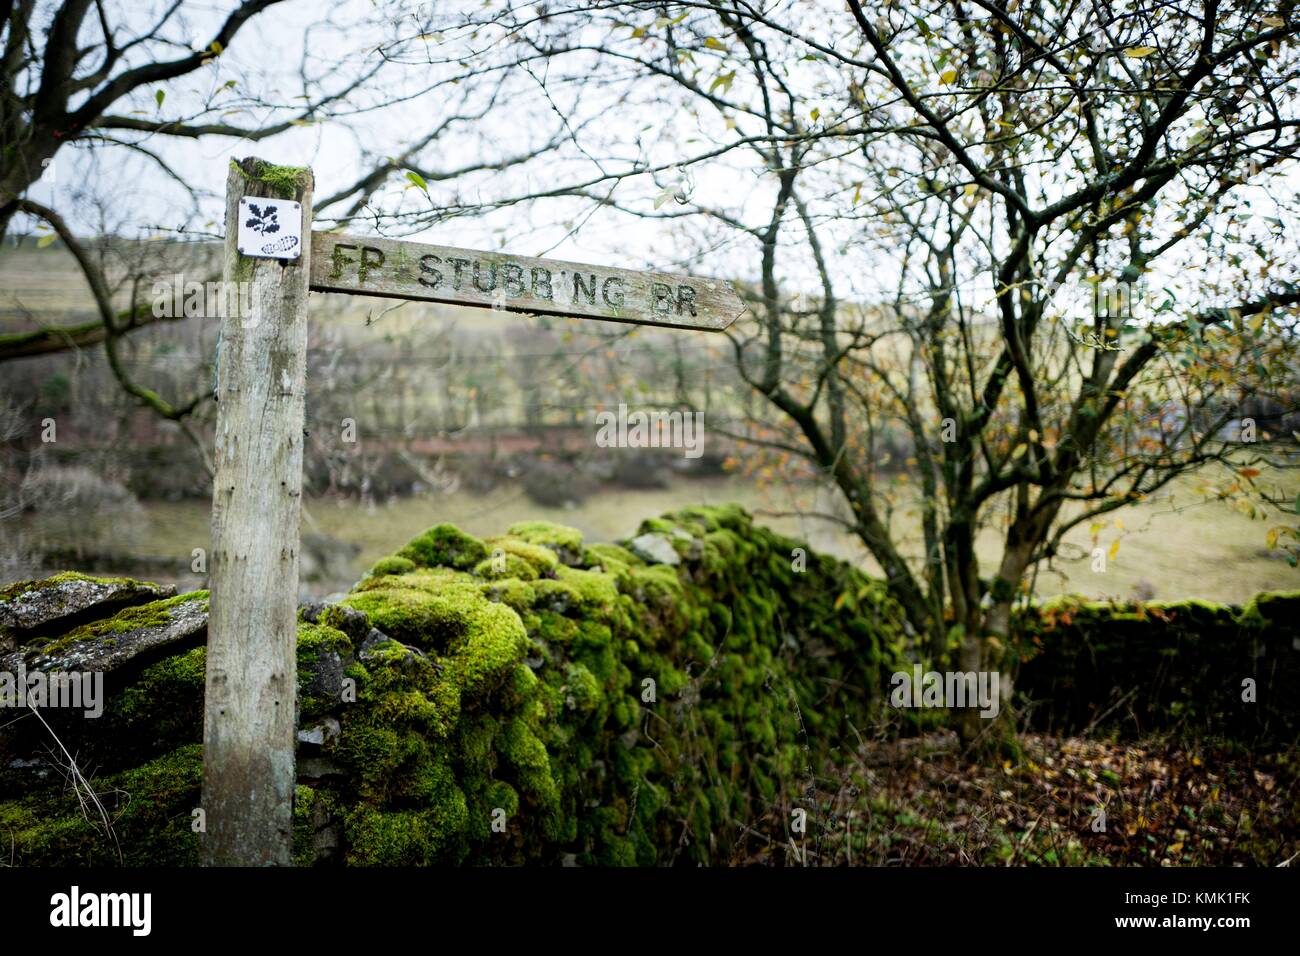 Closeup of signpost, FP ´ Stubbng´ Buckden, Yorkshire Dales, North Yorkshire, Skipton, UK. Stock Photo